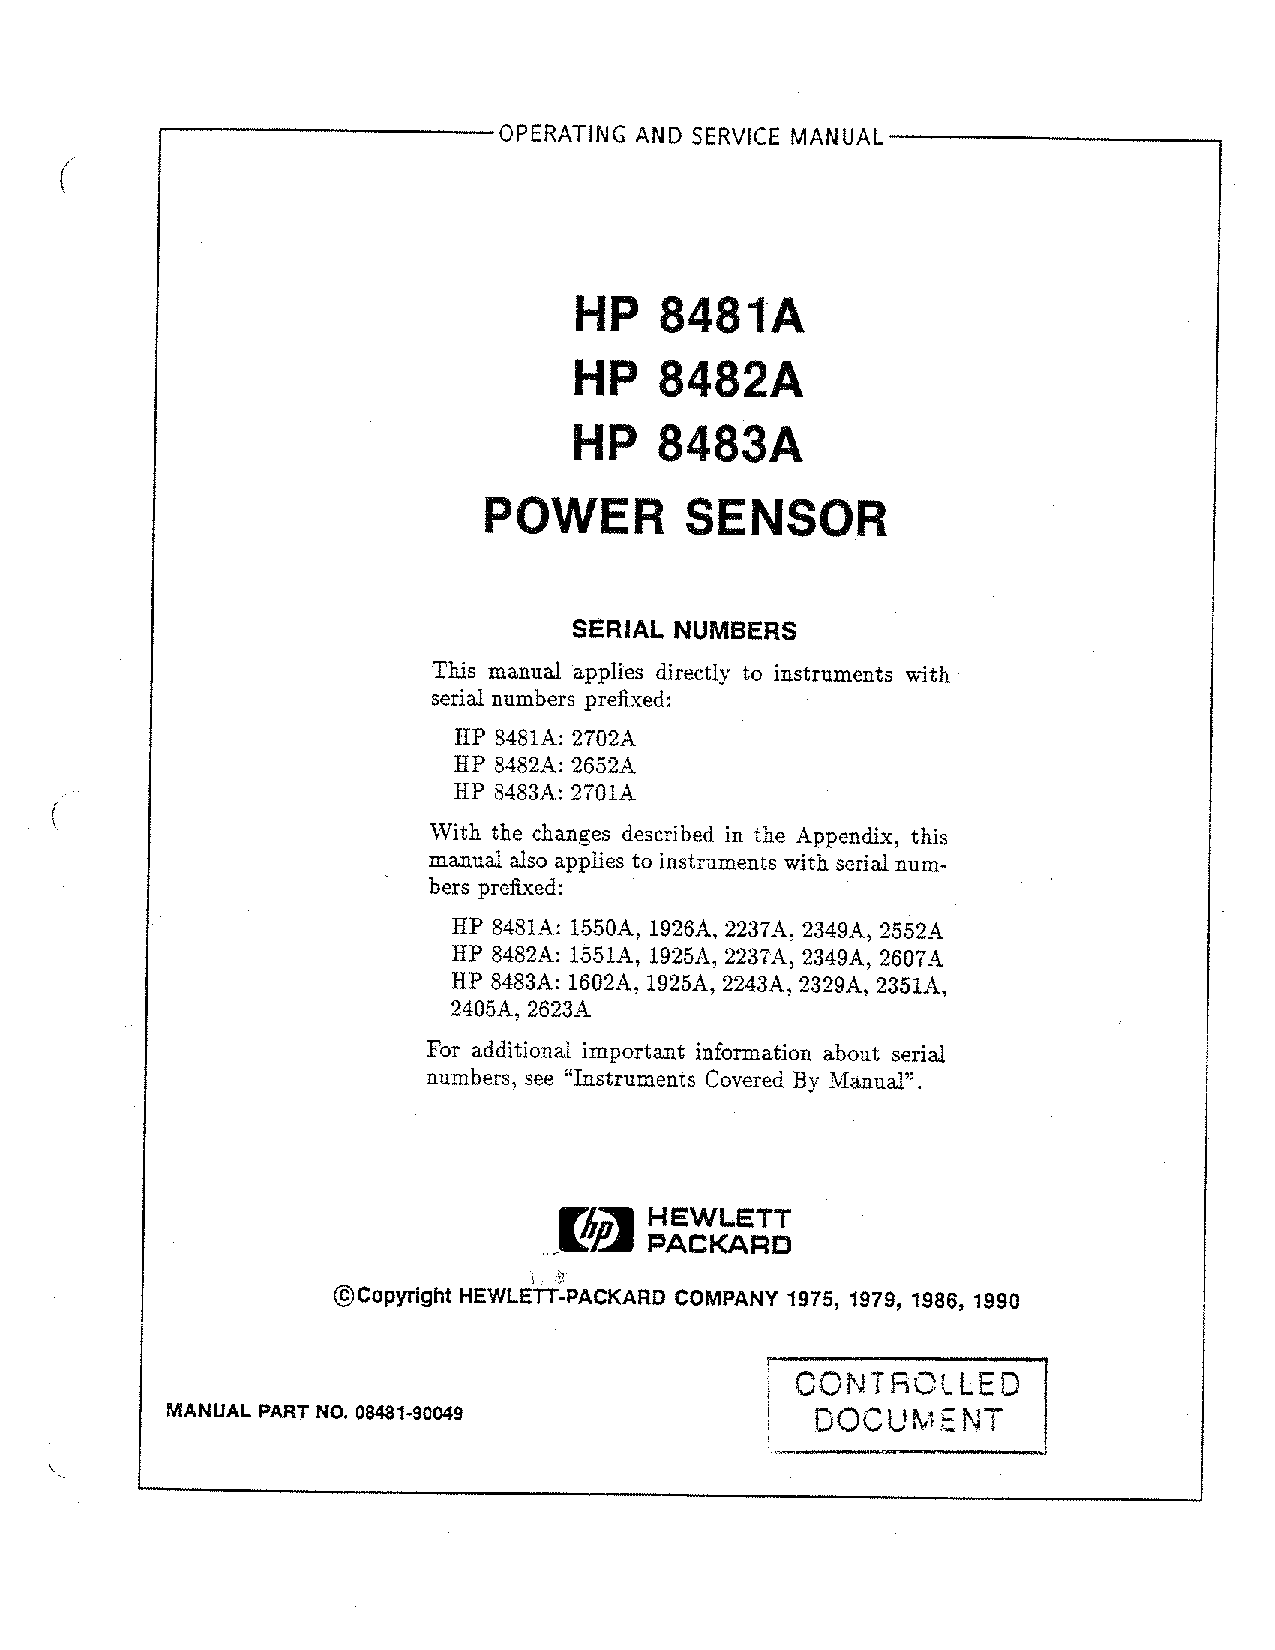 HP 8481A, 8483A, 8482A User Manual